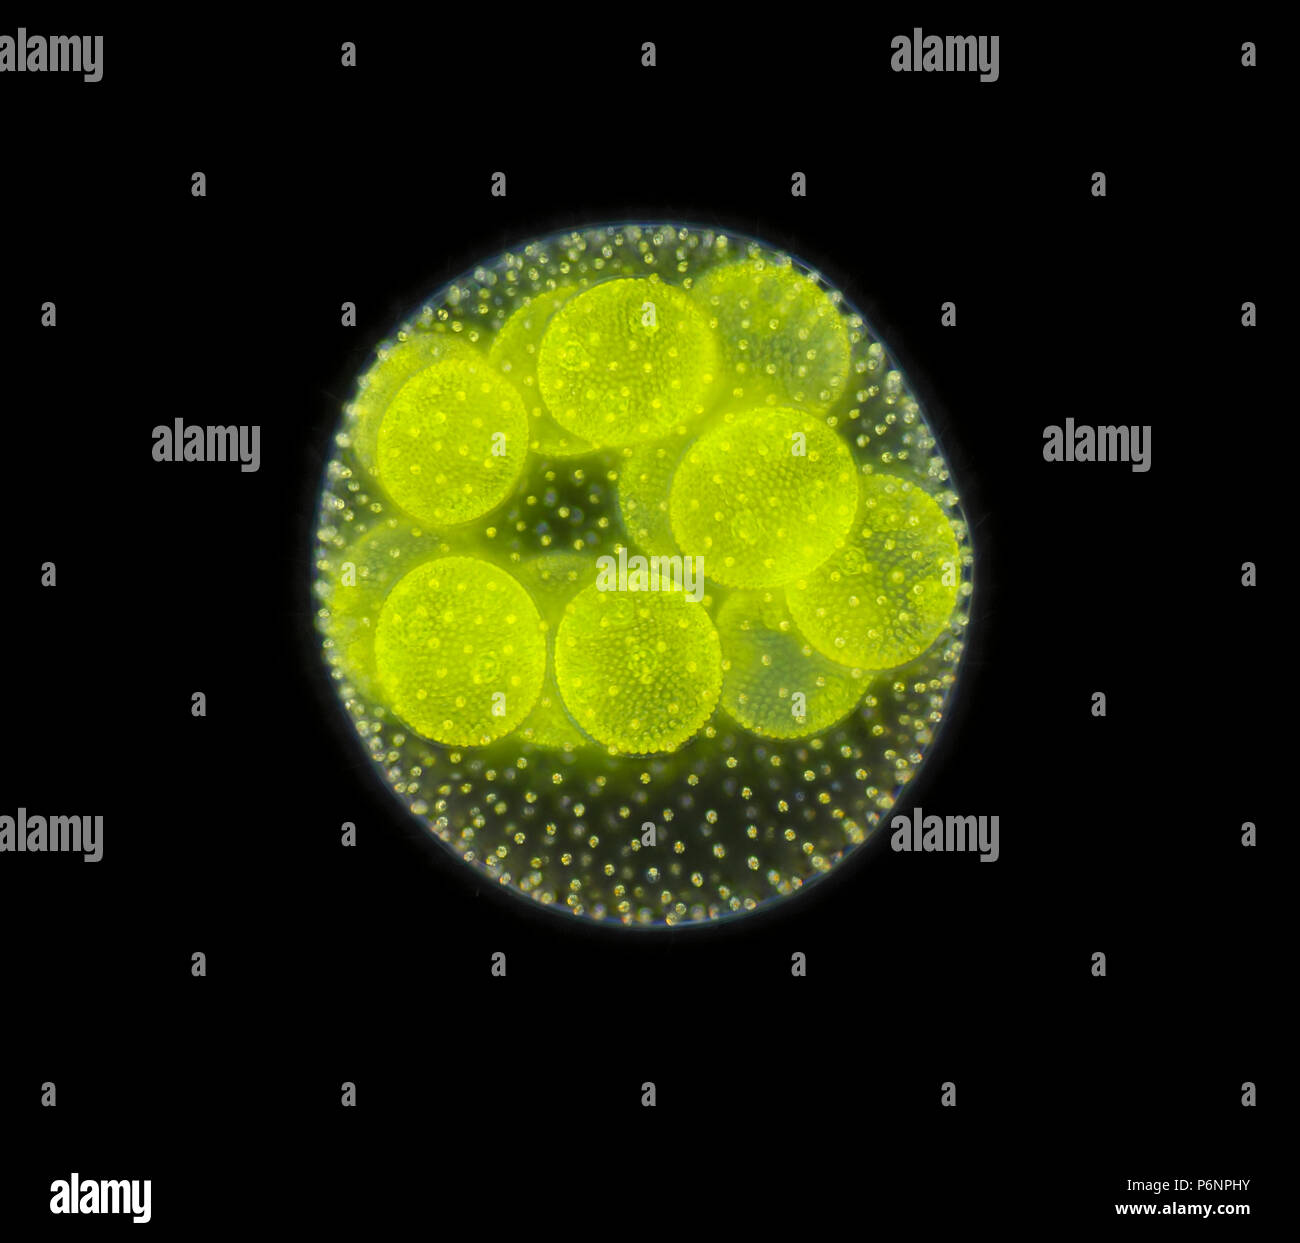 Spherical colony of freshwater green algae (Volvox). Microscopic view, darkfield illumination. Stock Photo